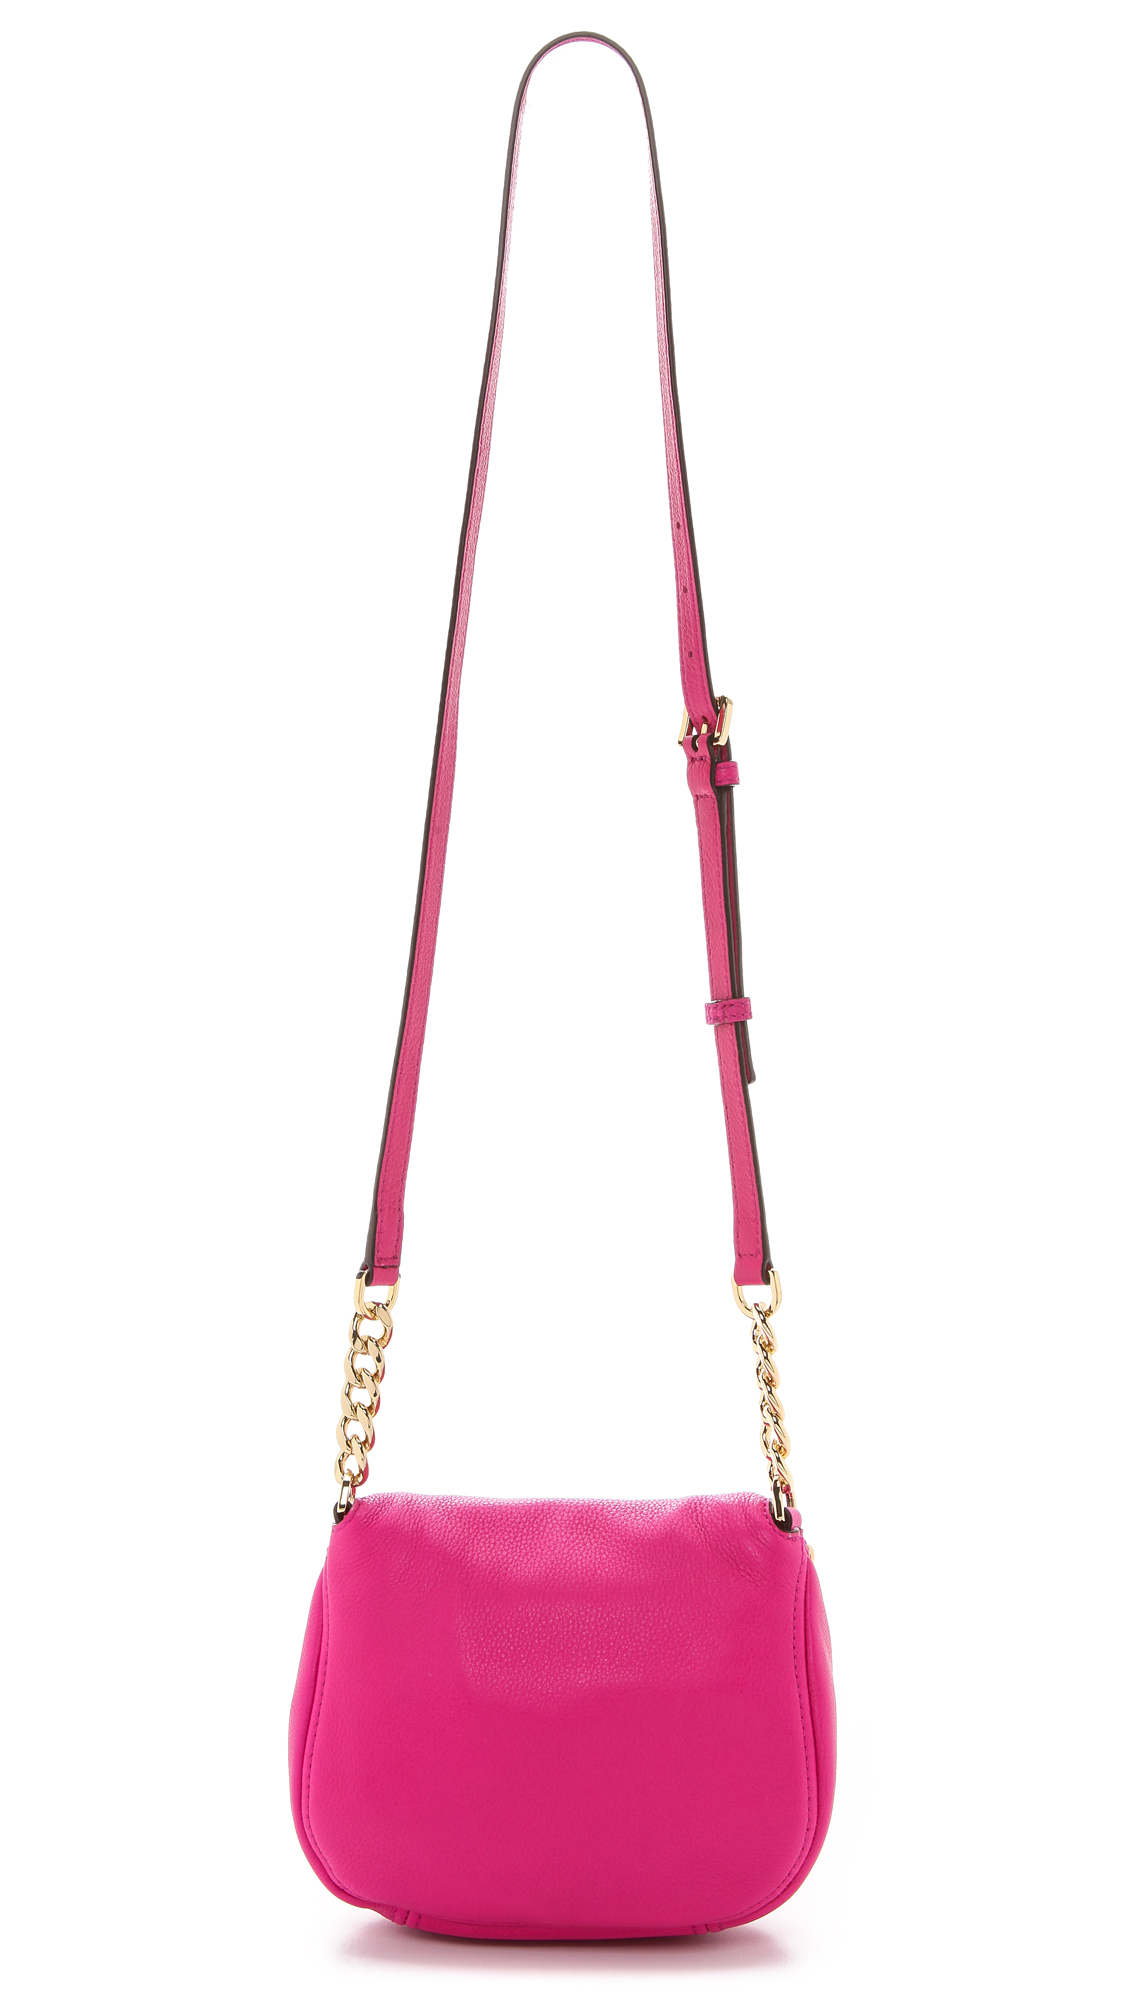 Lyst - Michael Michael Kors Bedford Flap Cross Body Bag Luggage in Pink